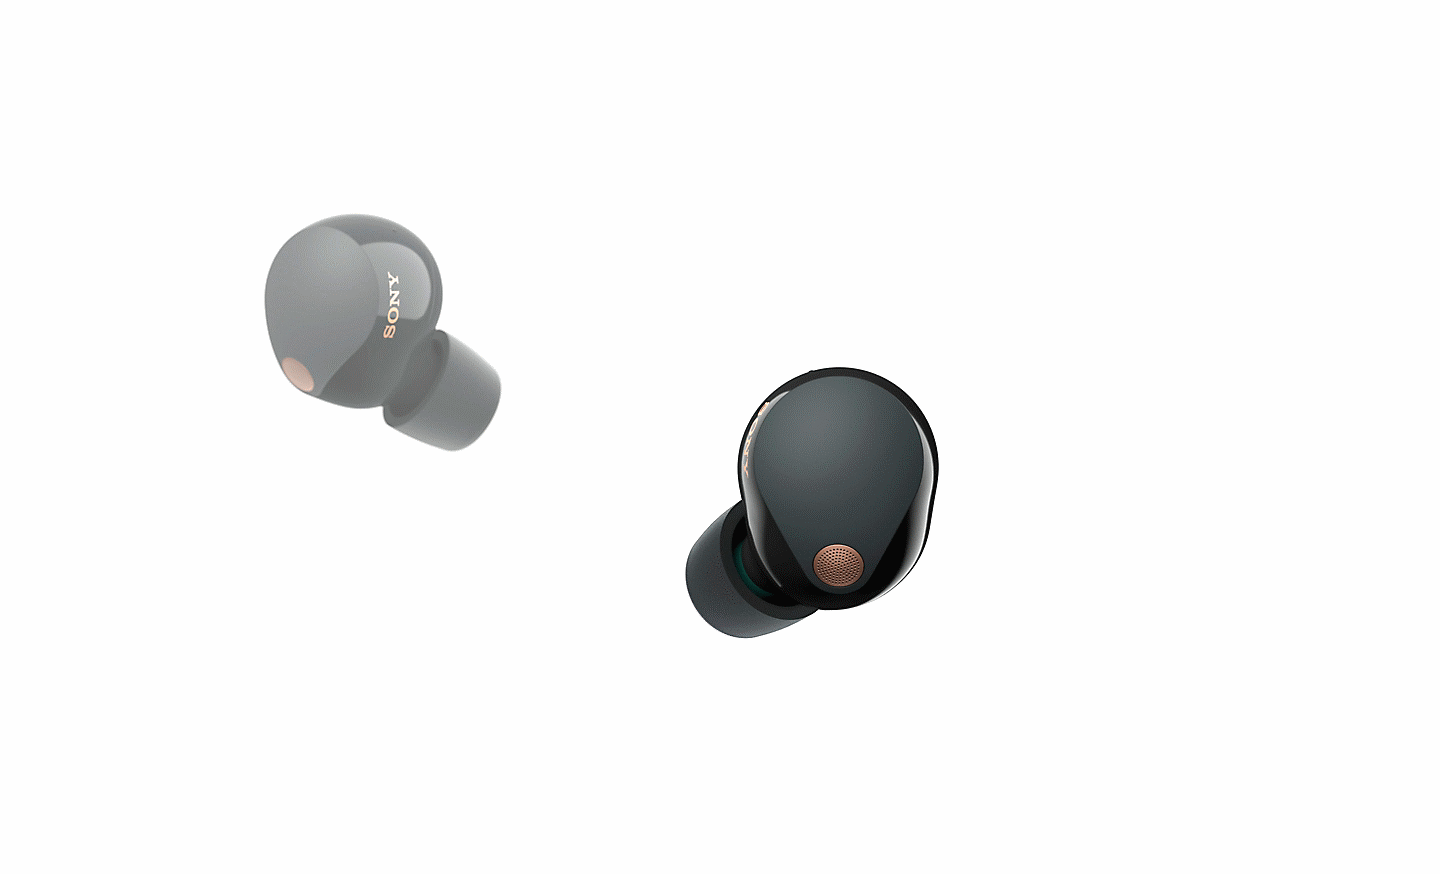 Prikaz slušalica WF-1000XM5 od 360 stupnjeva